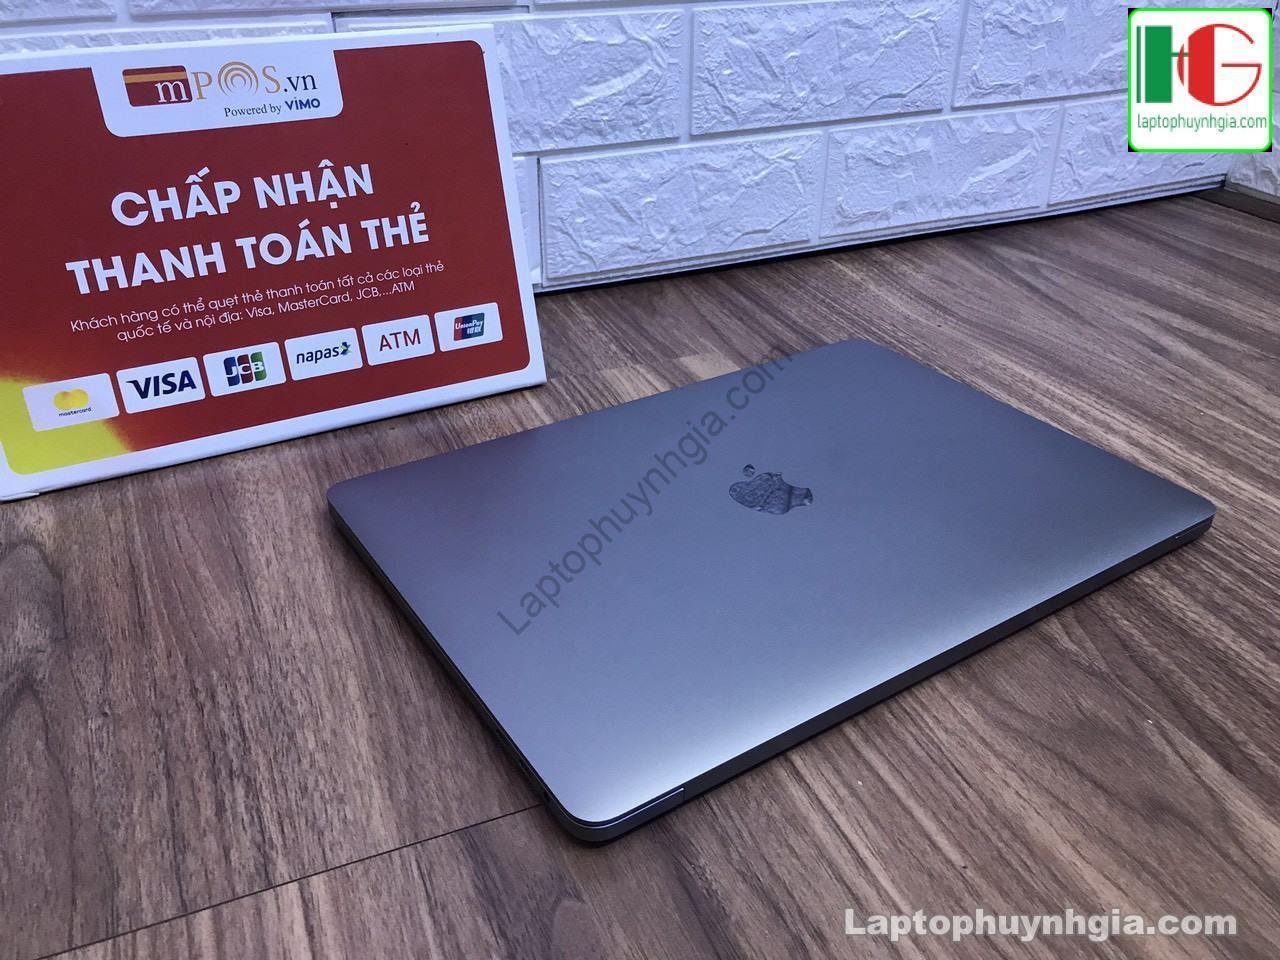 Macbook Pro 2016 I5 8g Ssd 256g Lcd 13 Laptopcubinhduong.vn